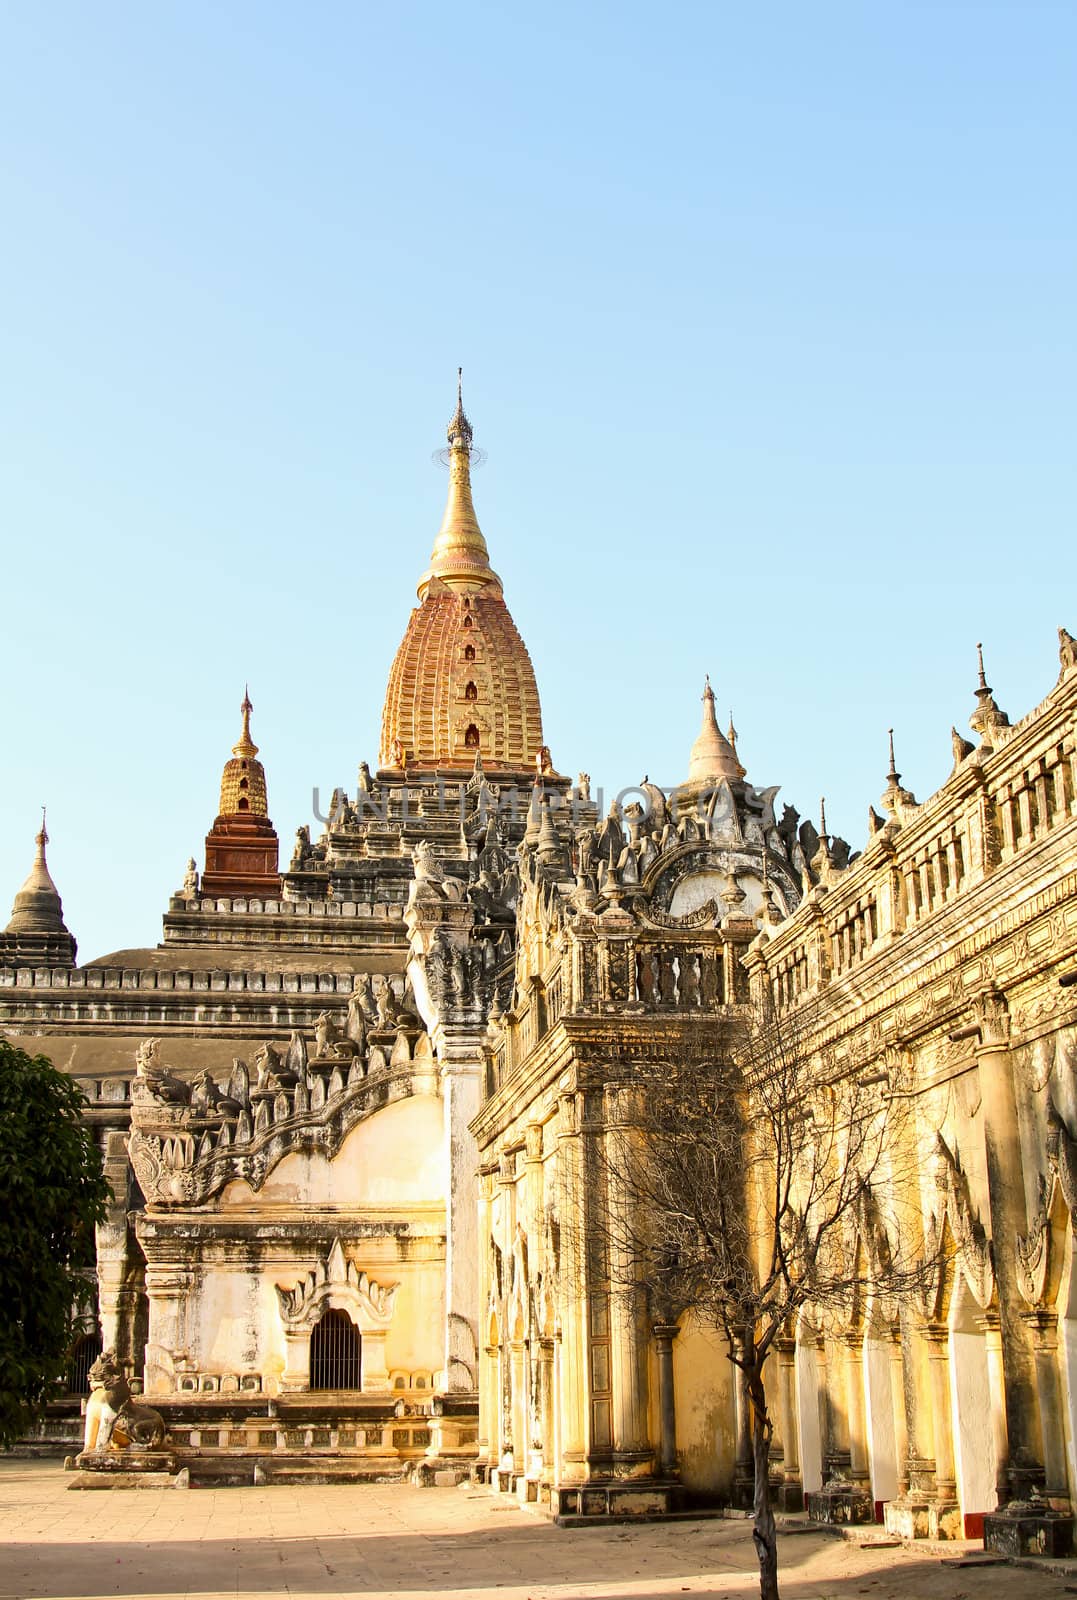 Ananda Temple in Bagan,Burma by vanillaechoes